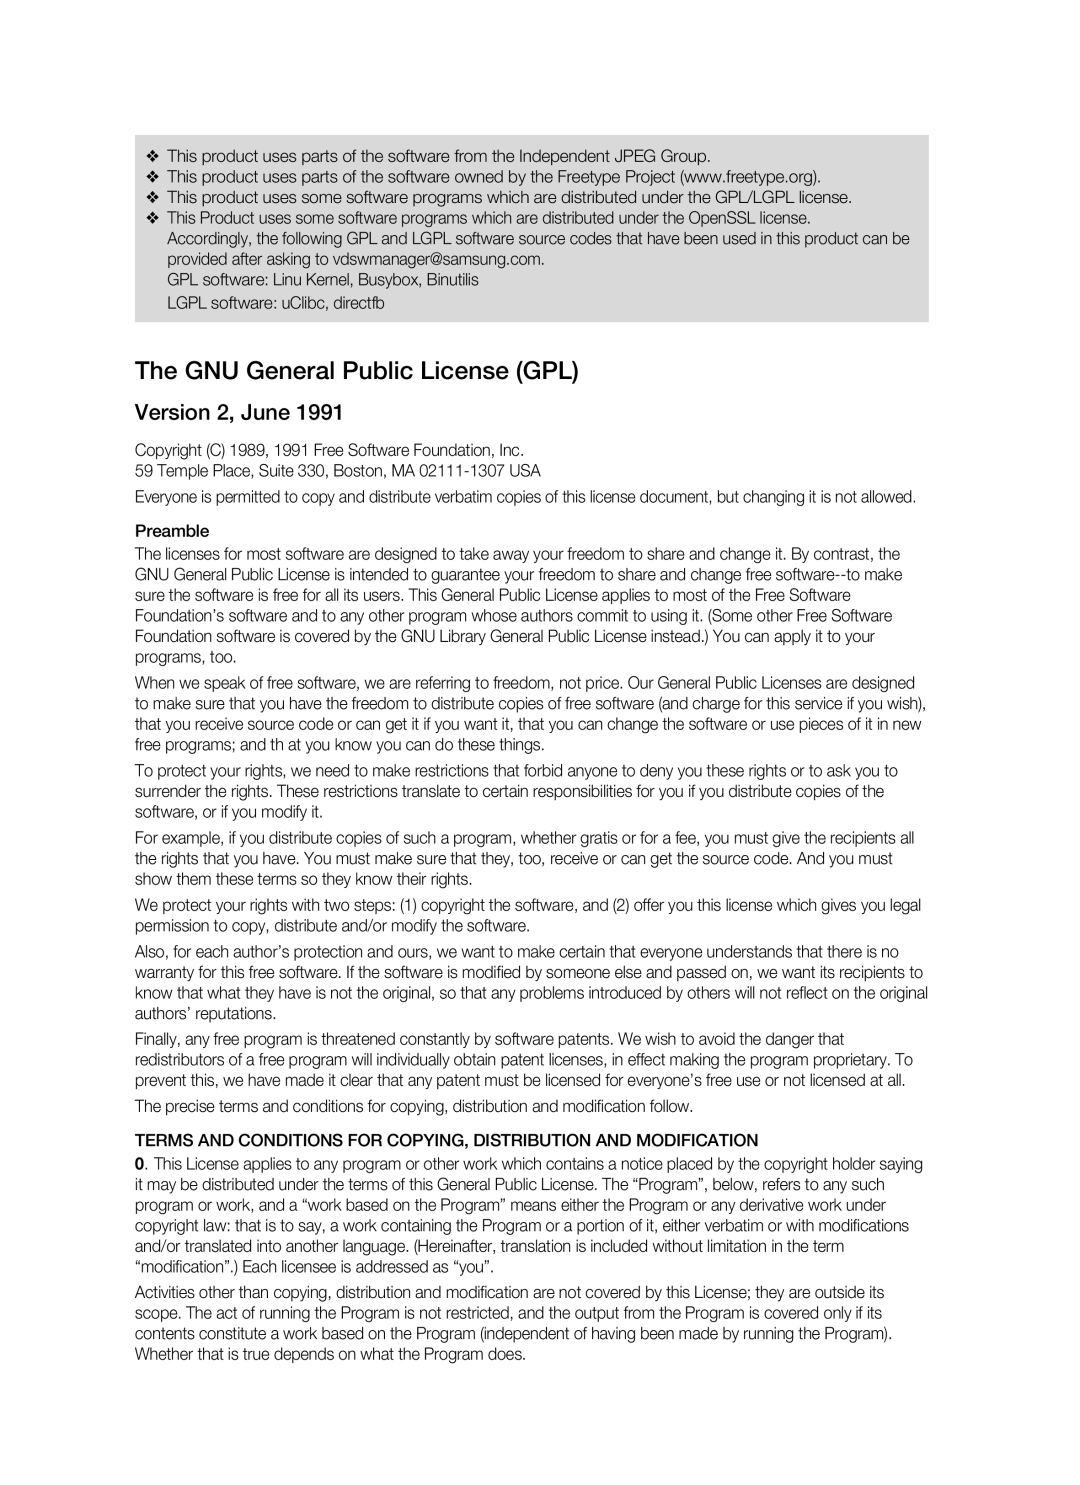 Samsung HT-BD8200 user manual The GNU General Public License GPL, Version 2, June 